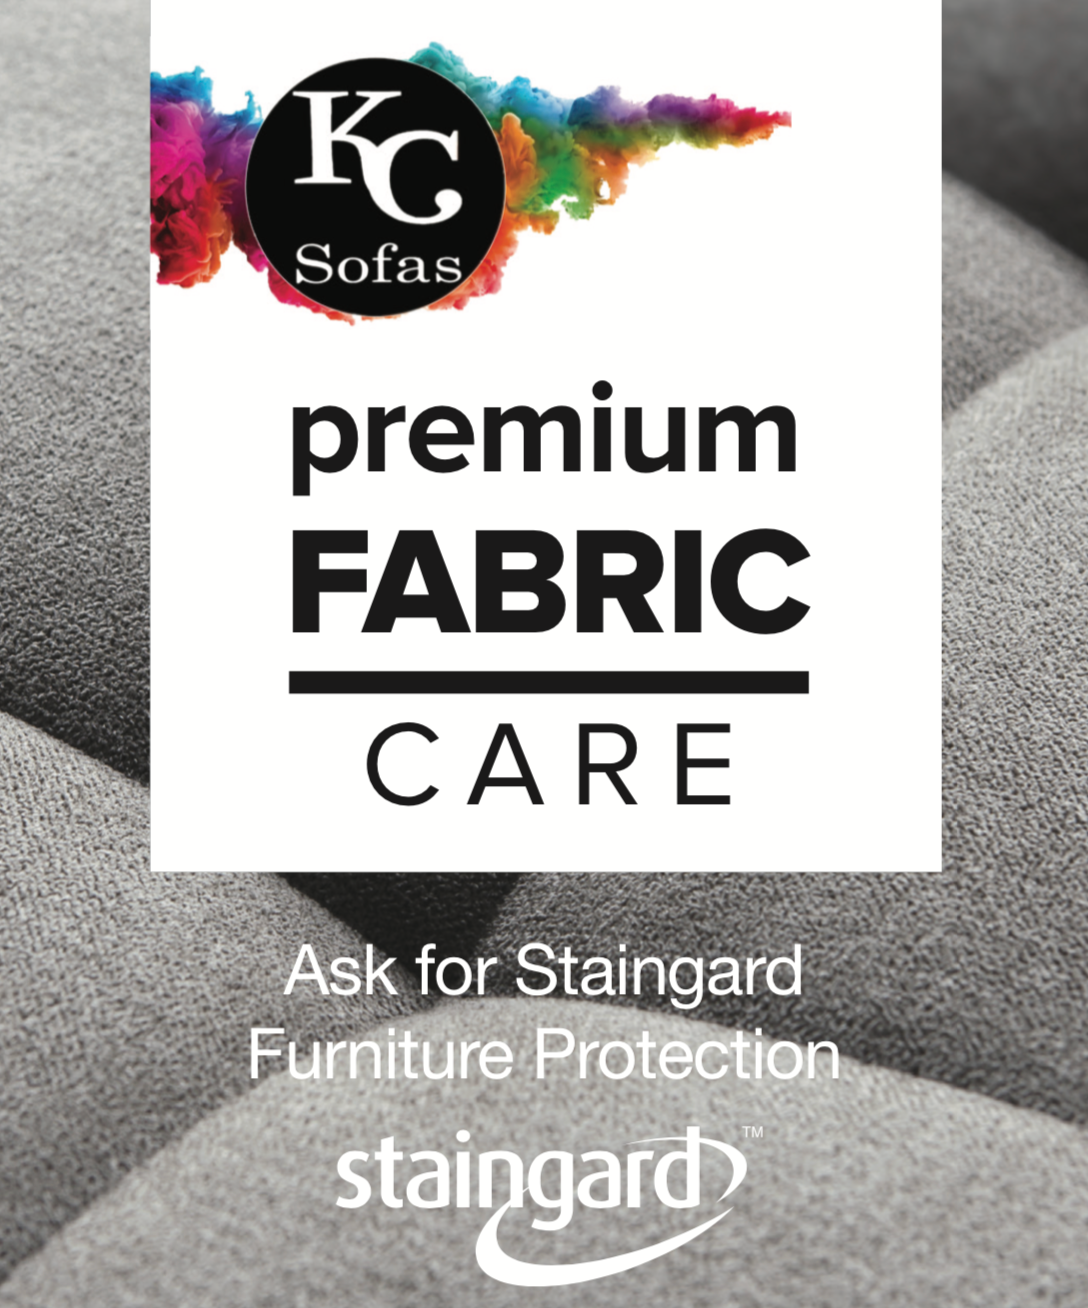 Staingard 5 Year Protection Plan (Fabric) Care Plan- KC Sofas